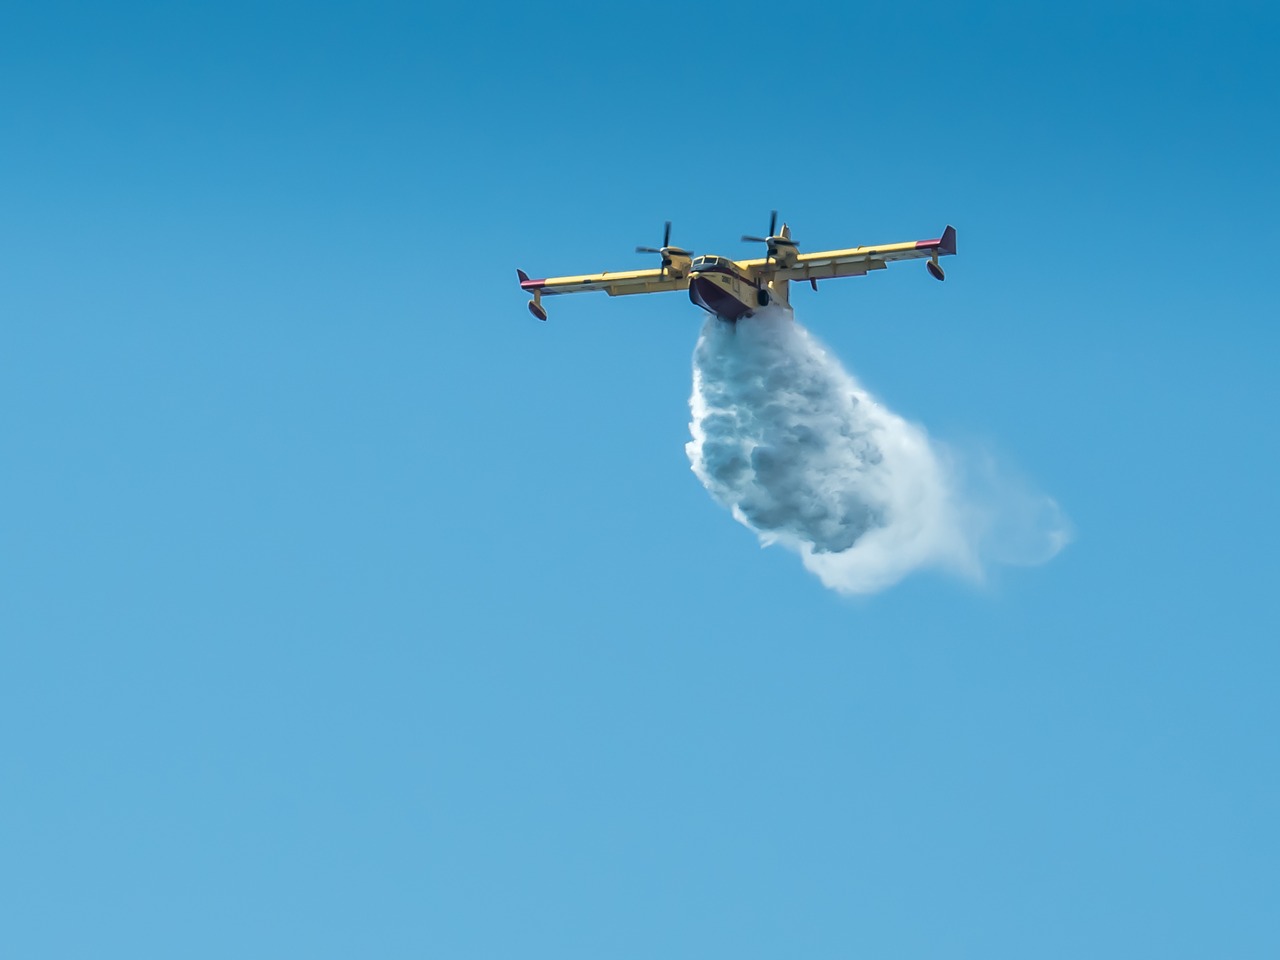 Image - air festival flight aircraft smoke